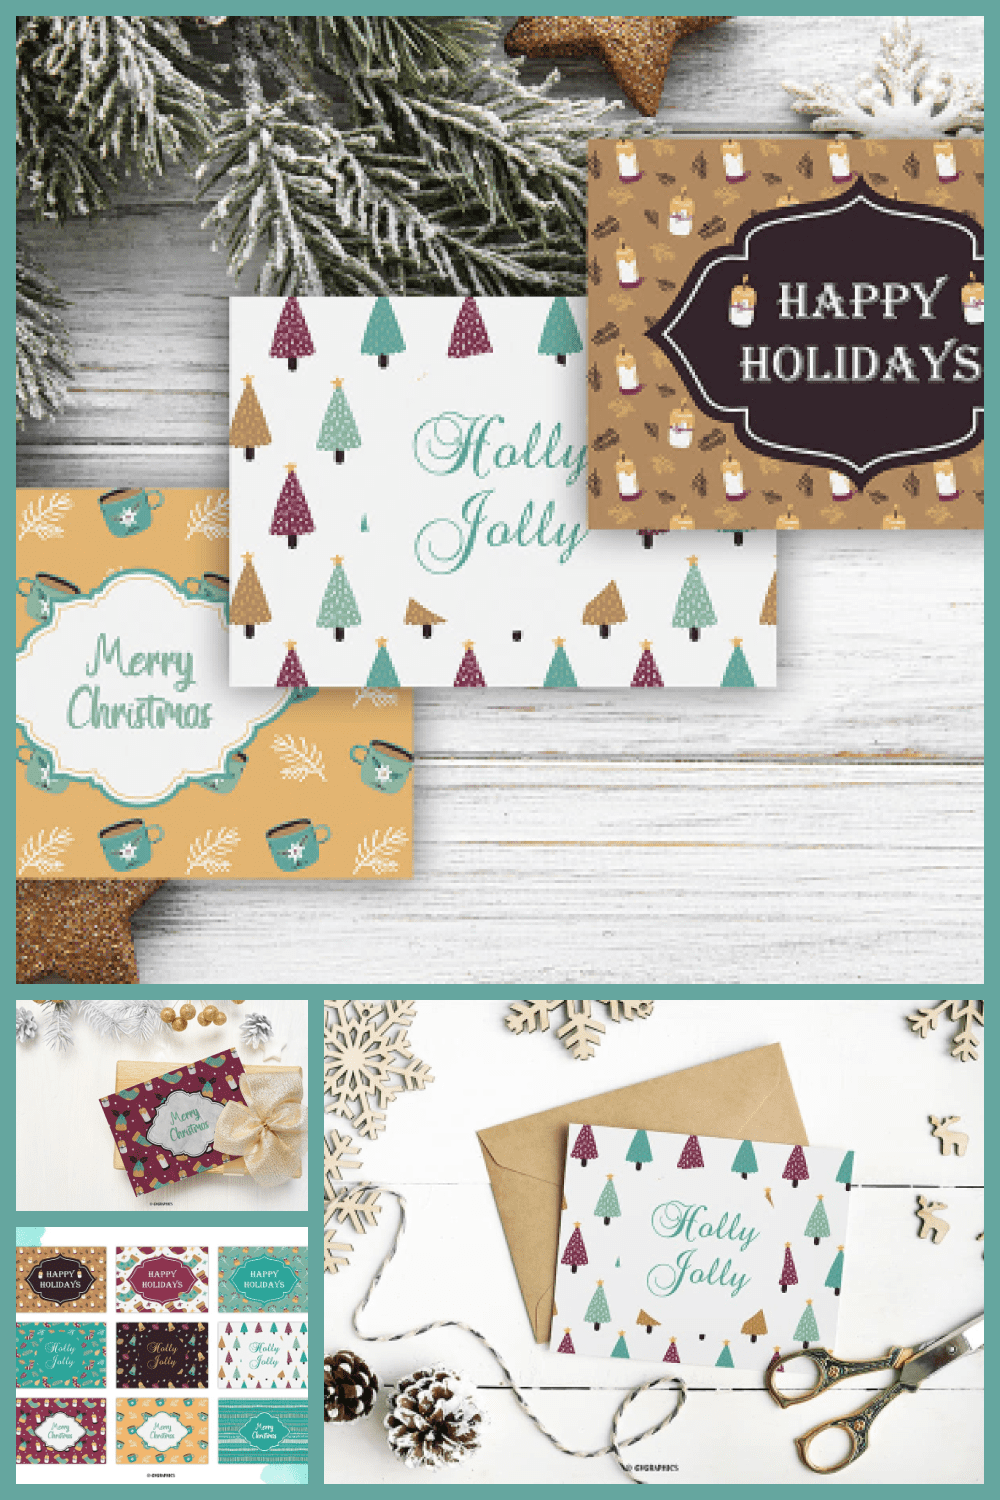 Christmas Greeting Cards - MasterBundles - Pinterest Collage Image.